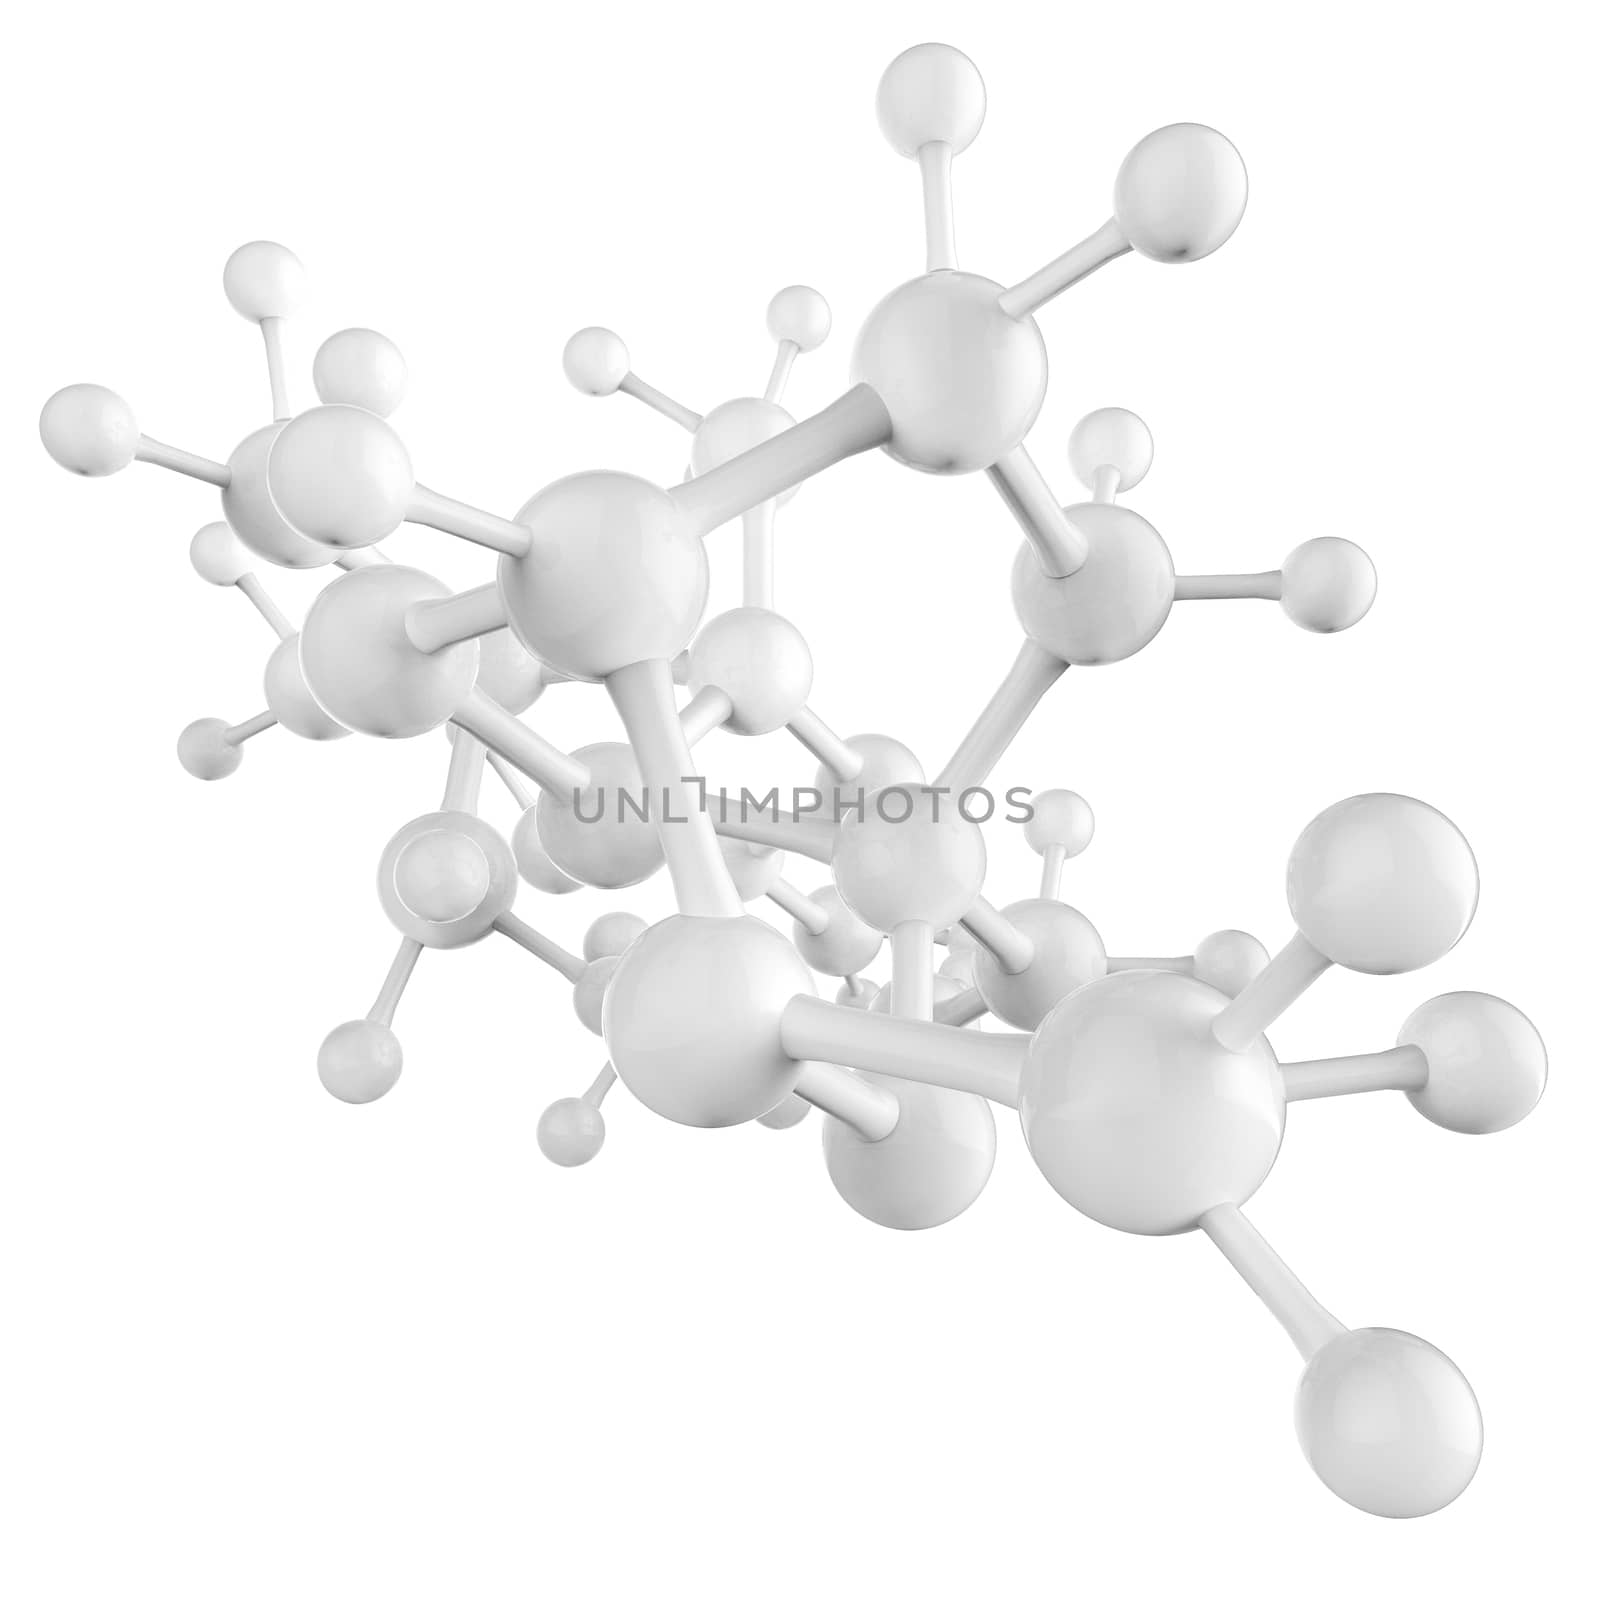 Molecule white 3d on white background